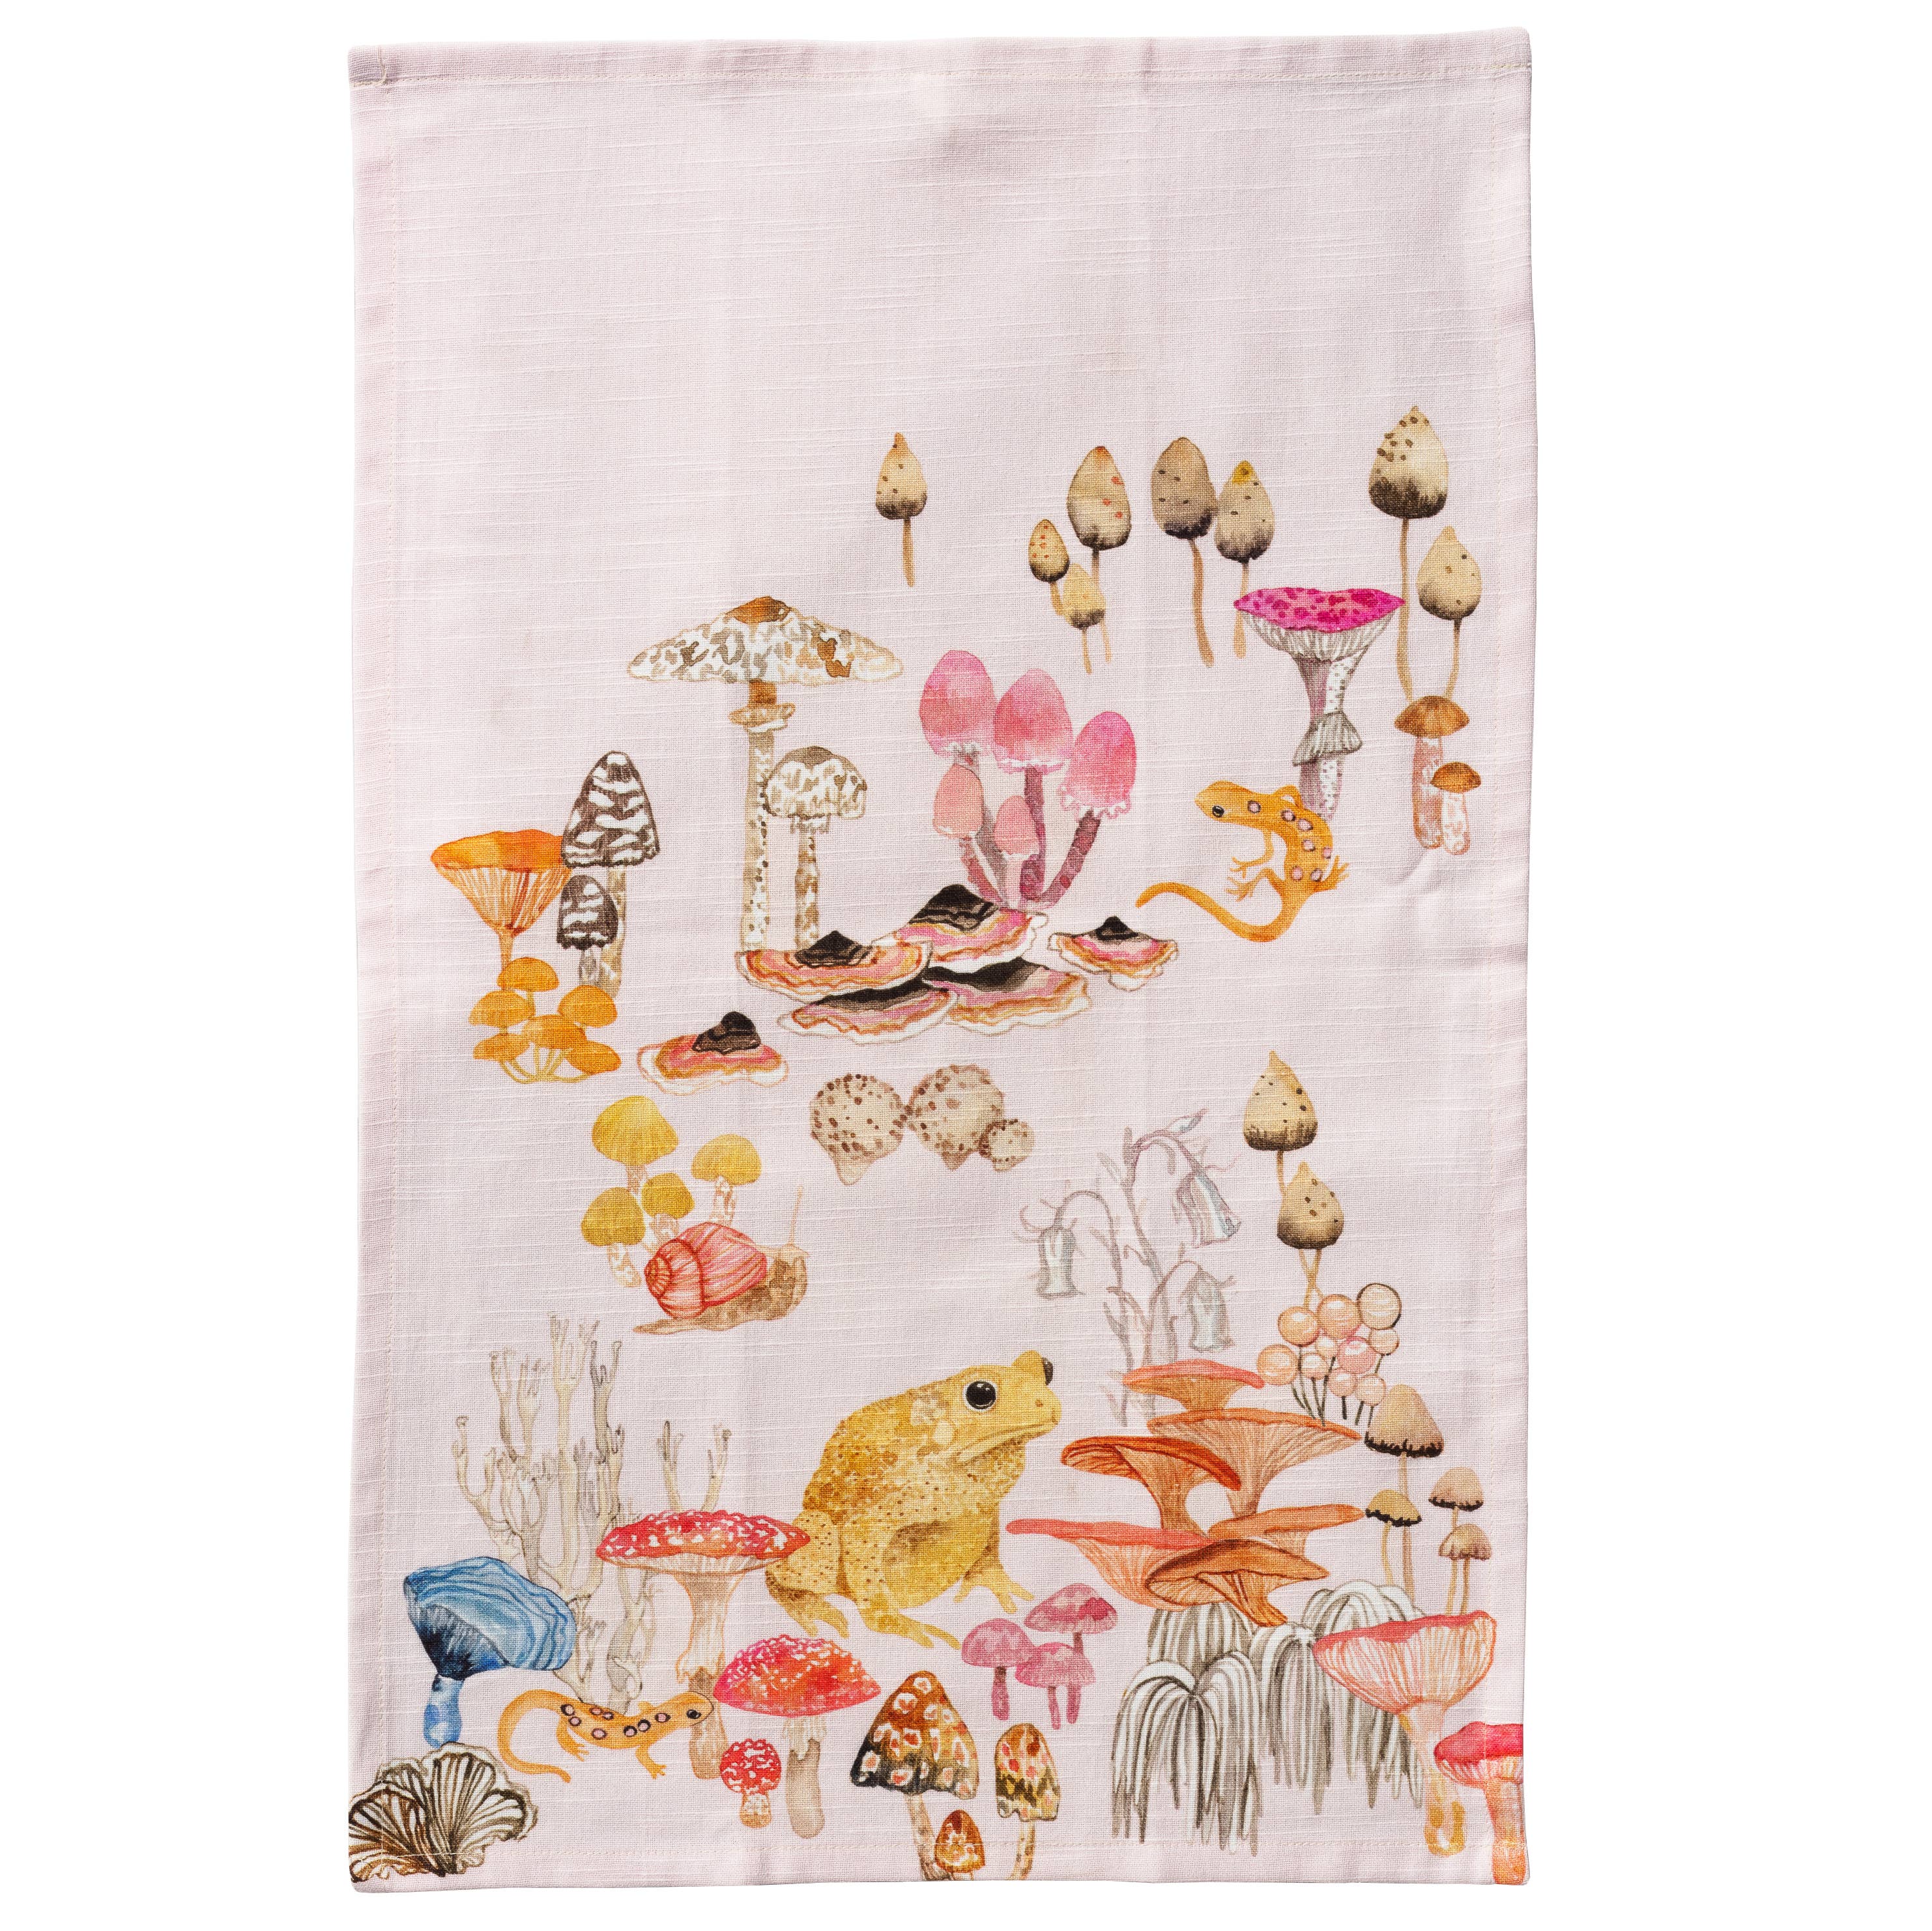 watercolor tea towel with amphibians